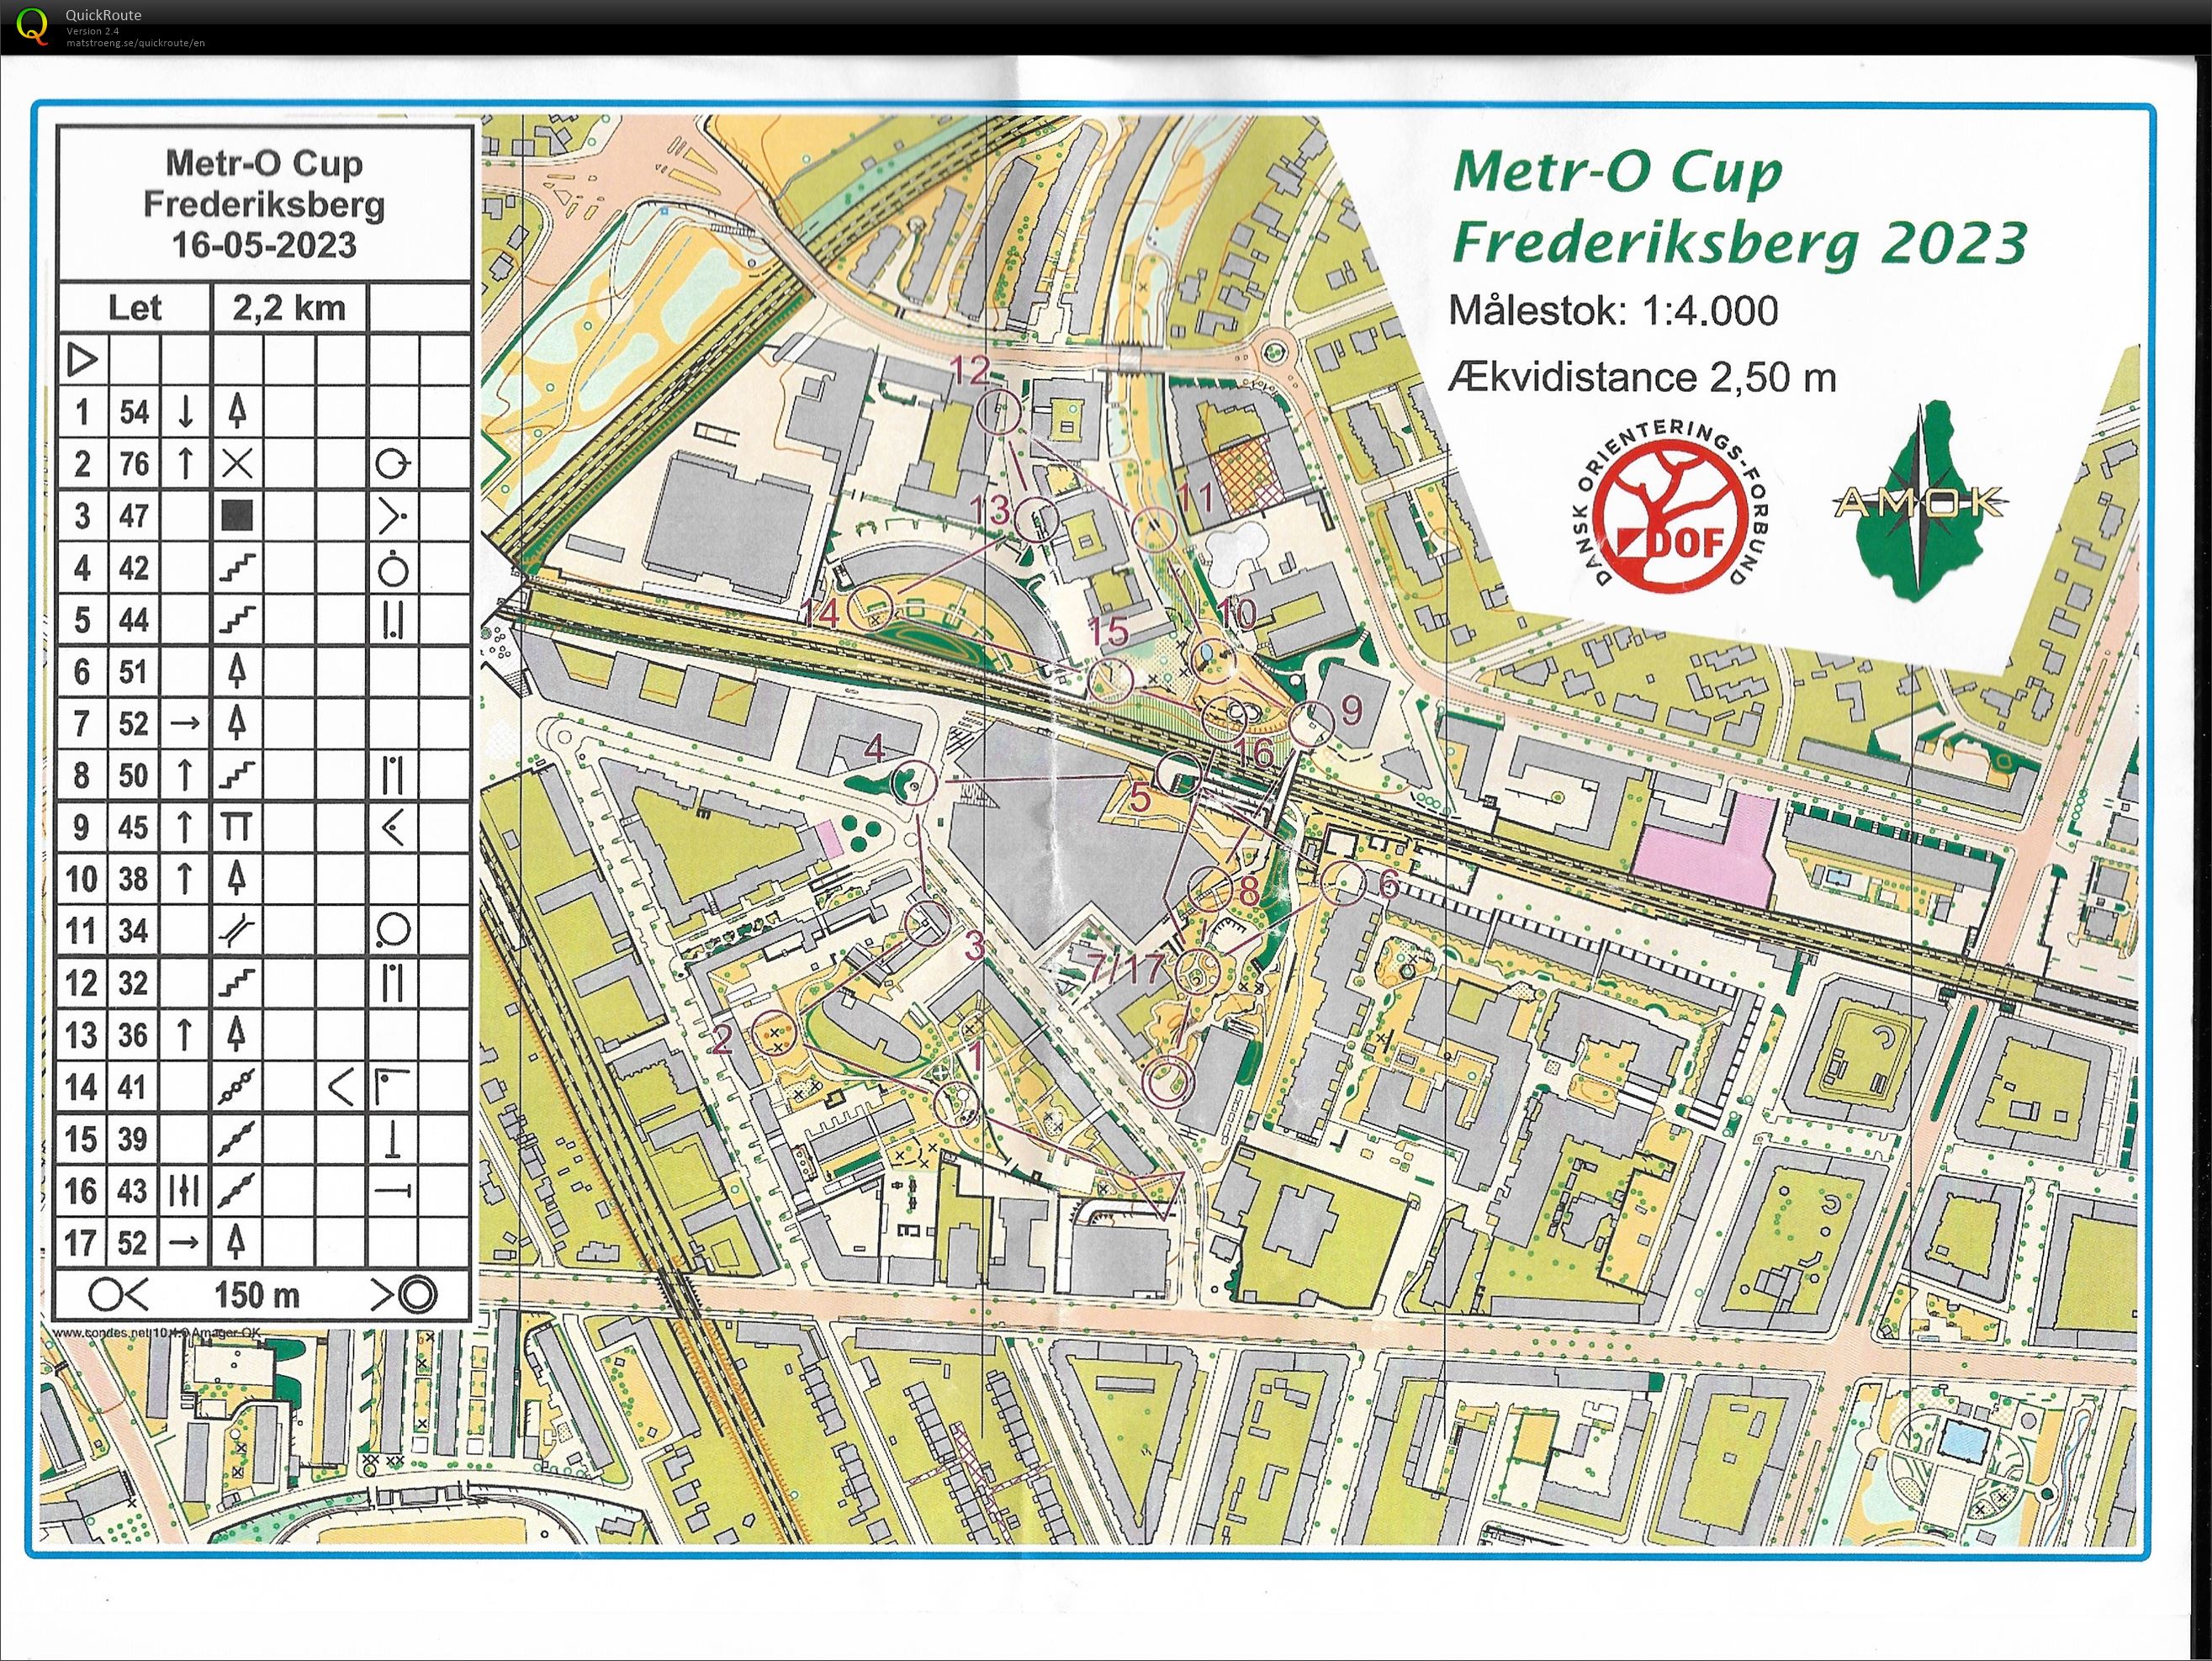 Metro- O Cup 2023 2. etape (16-05-2023)